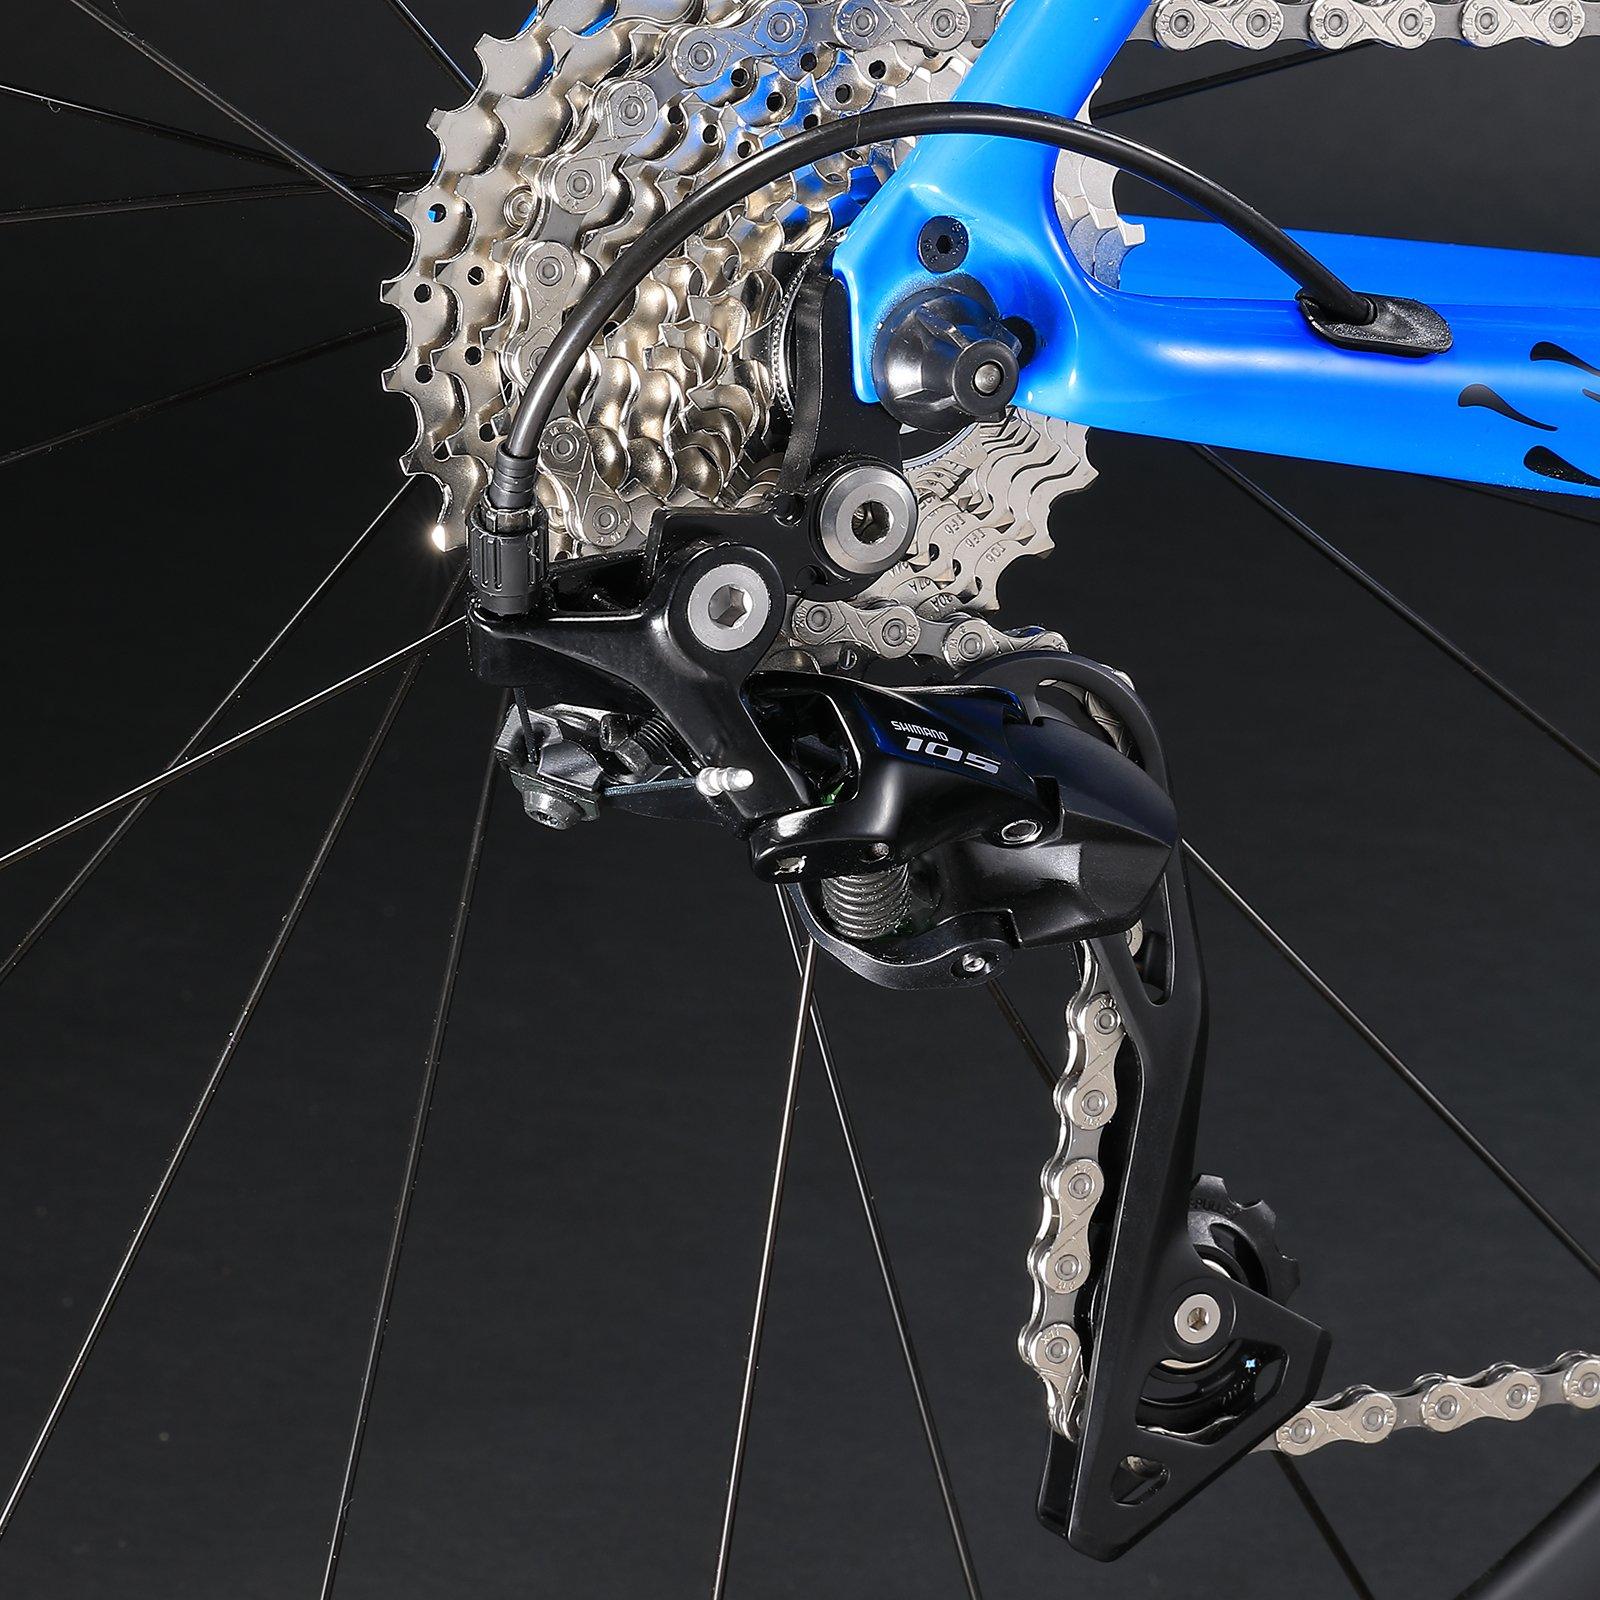 KOOTU R03 Carbon Road Bike T800 Carbon Fiber Frame Bicycle With Shimano 105 Groupset 22 Speed - KOOTUBIKE